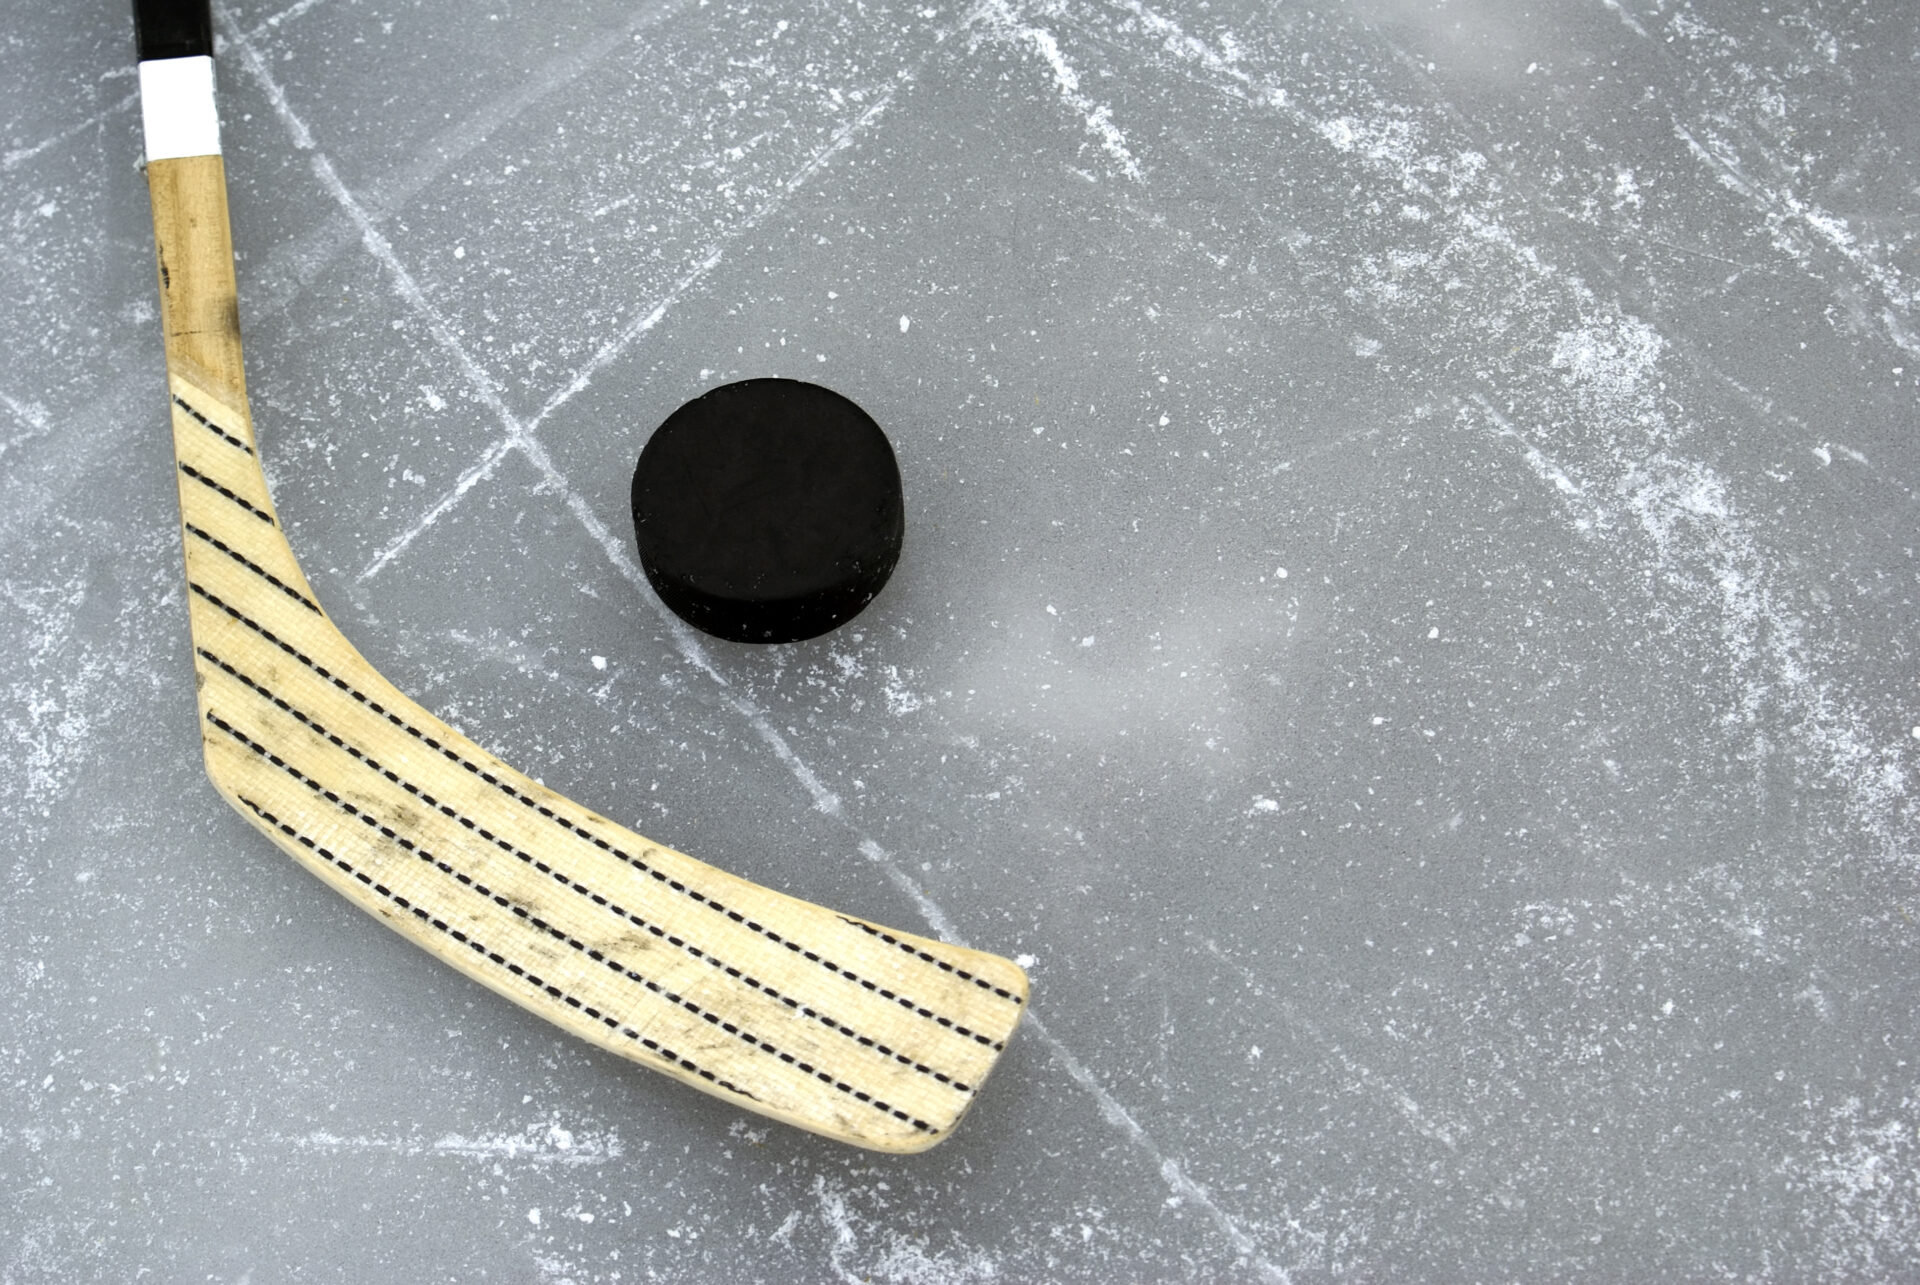 Hockey stick and black puck on ice